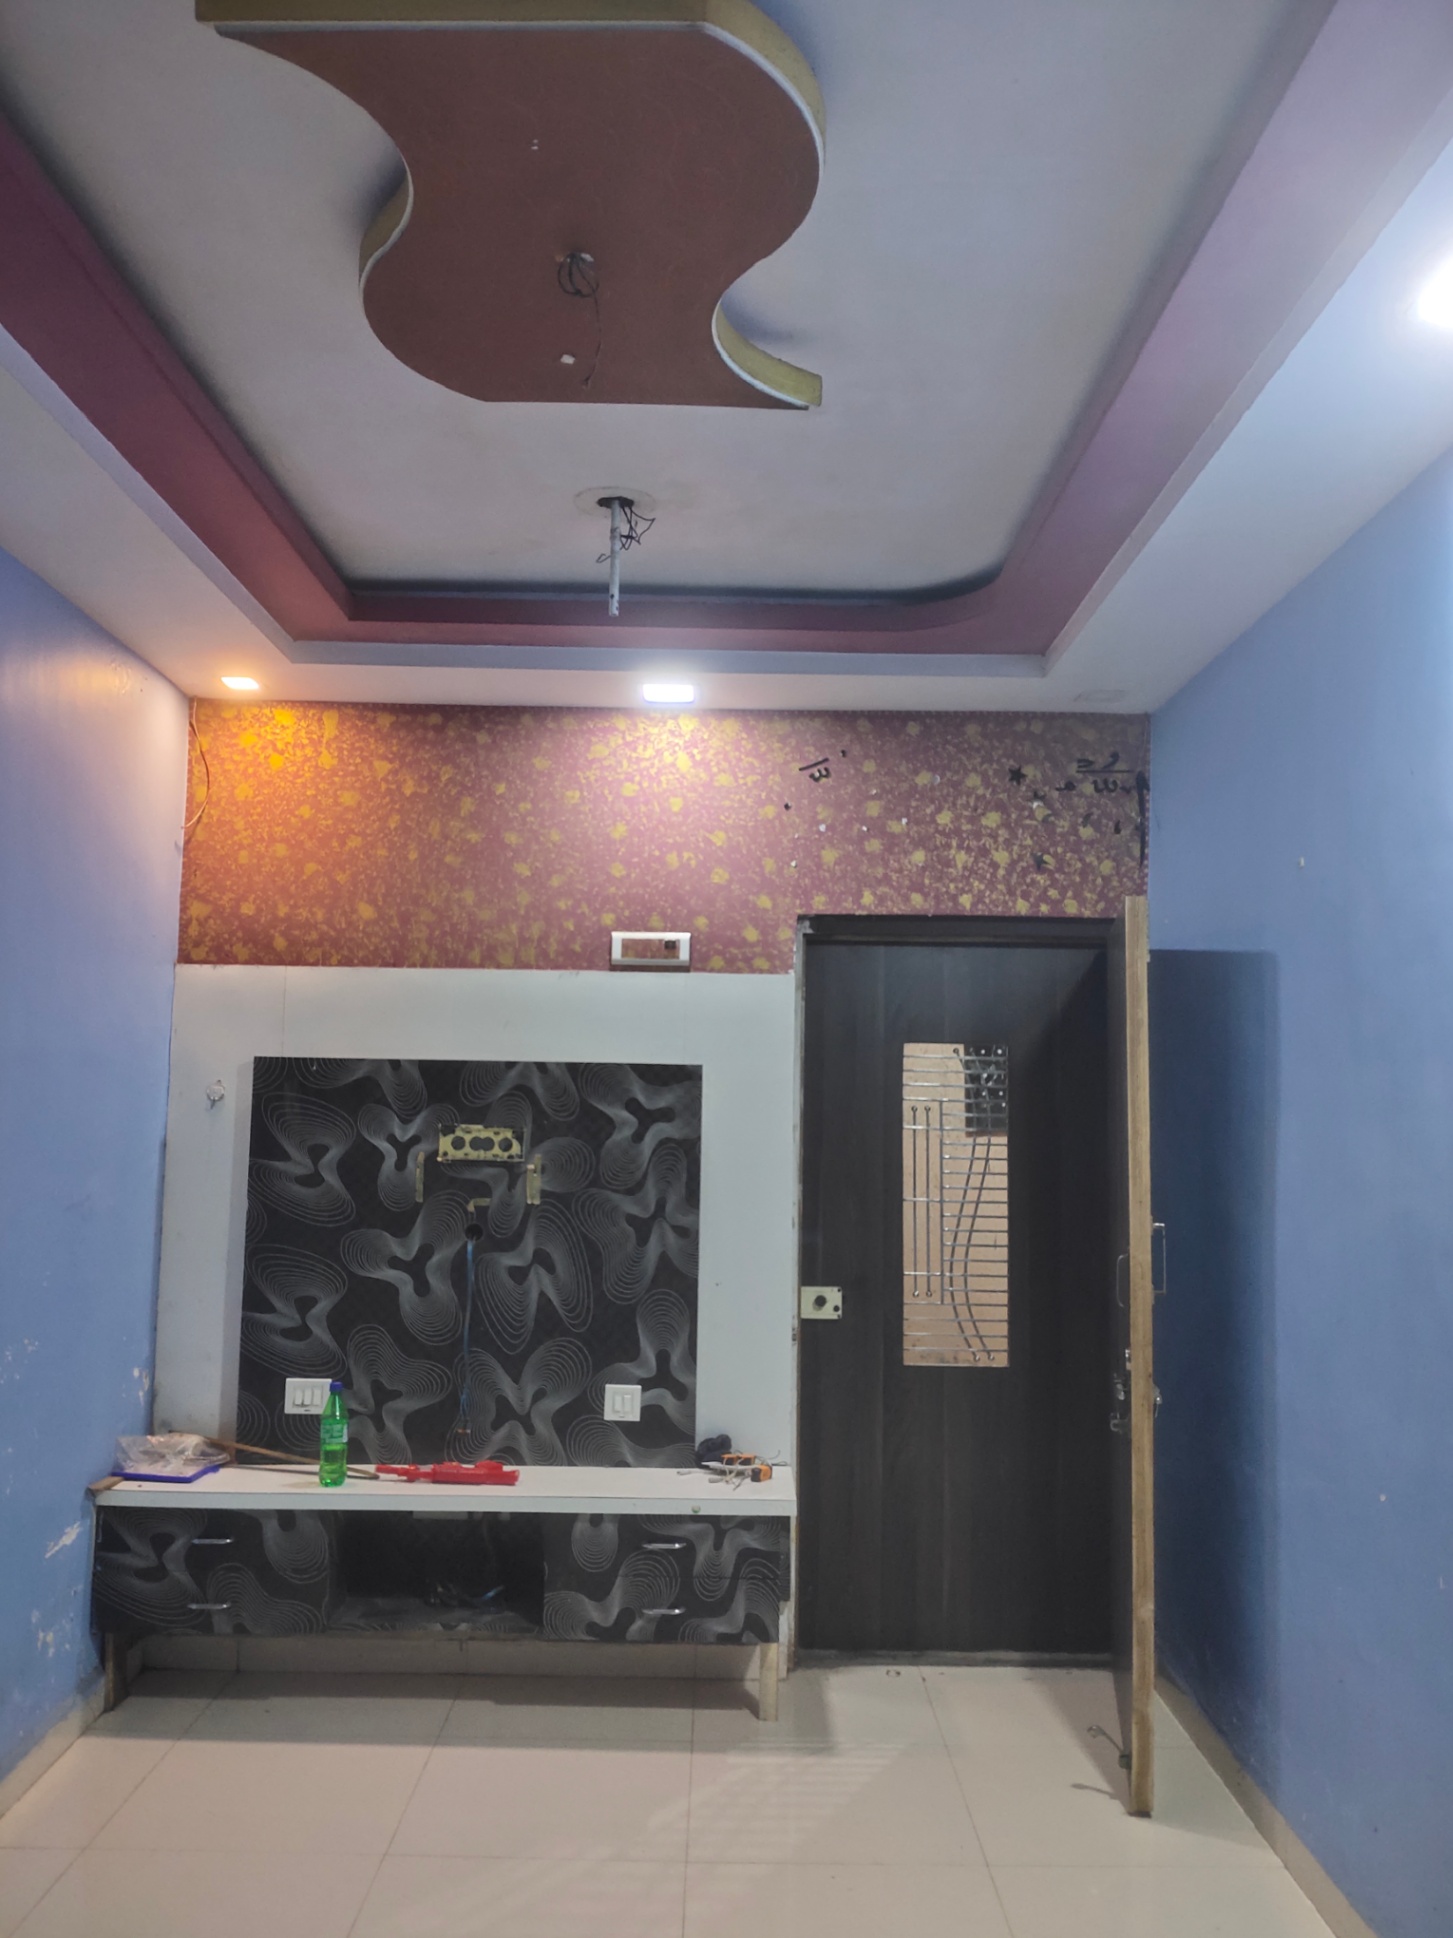 2 Bed/ 2 Bath Rent Apartment/ Flat; 600 sq. ft. carpet area, Furnished for rent @Suchak Naka, Kalyan